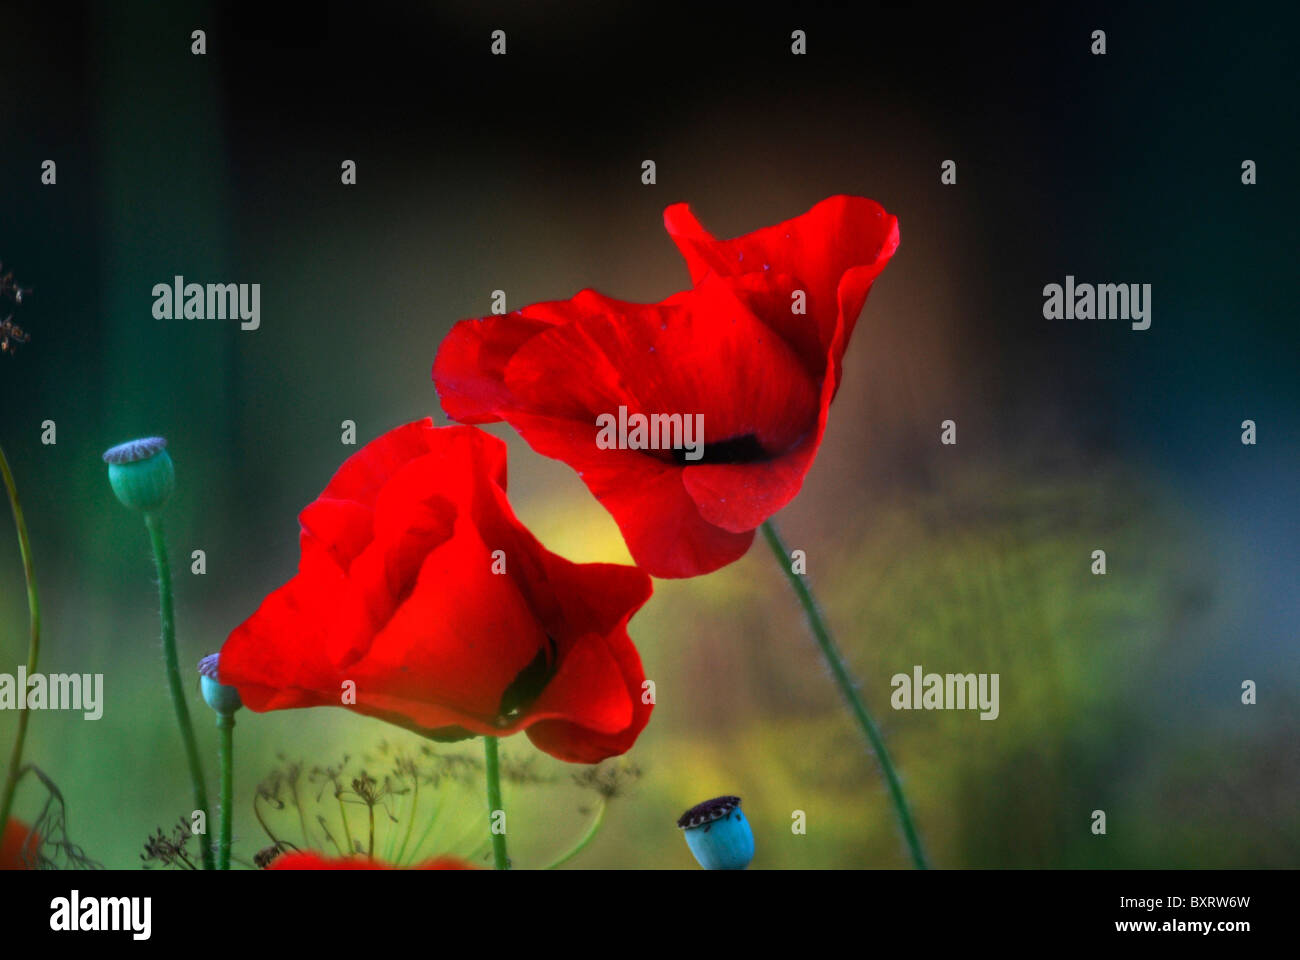 Red poppies in garden whit greenish background Stock Photo